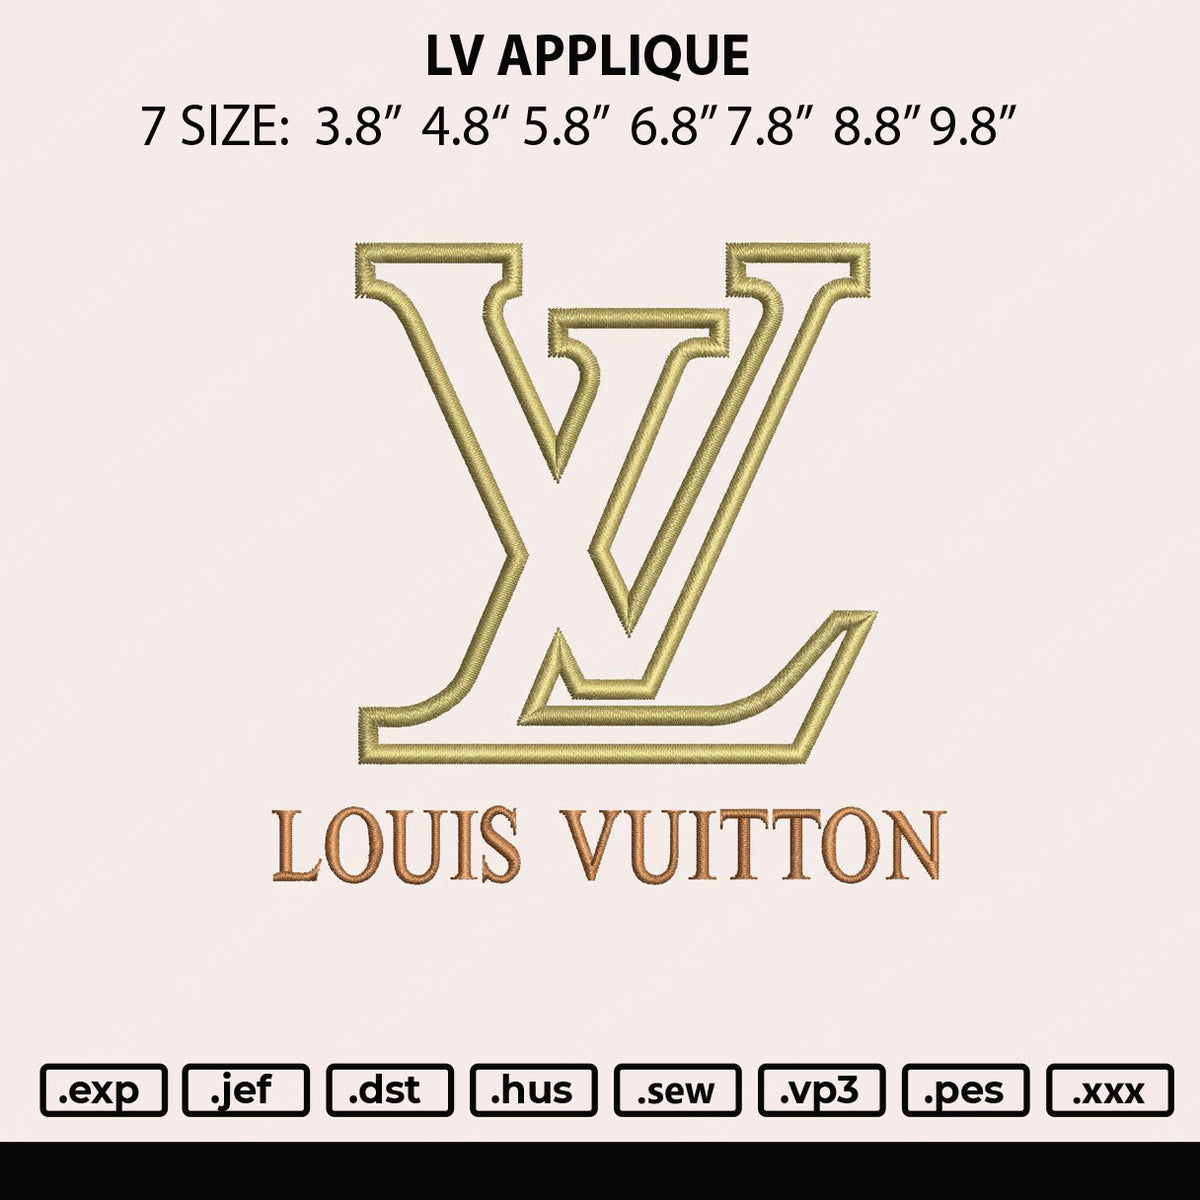 Louis Vuitton flower embroidery design